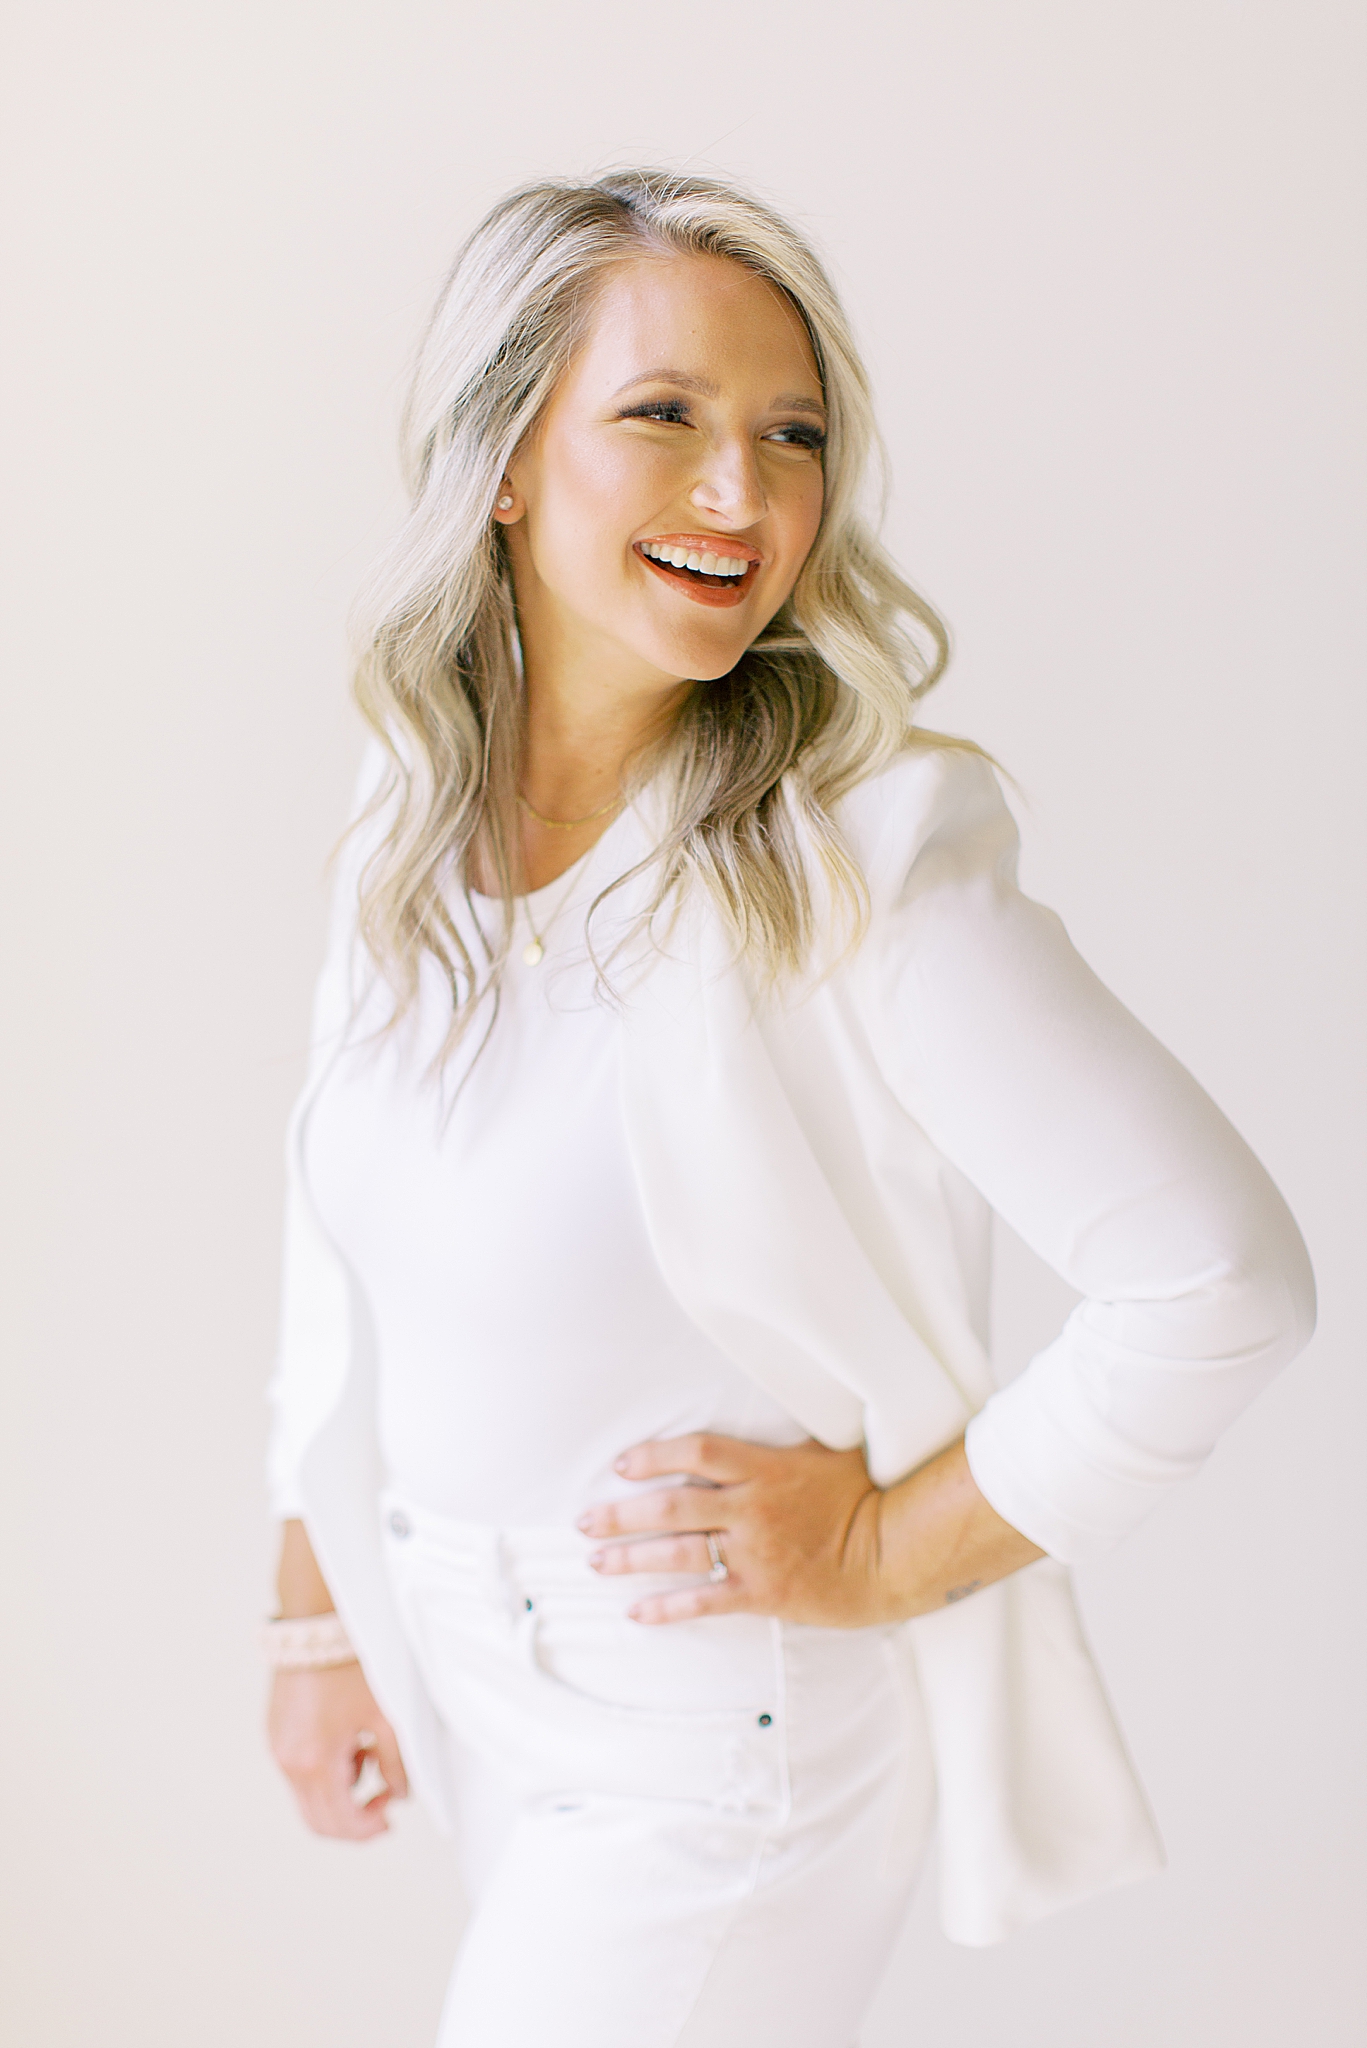 woman in white jacket smiles during branding photos